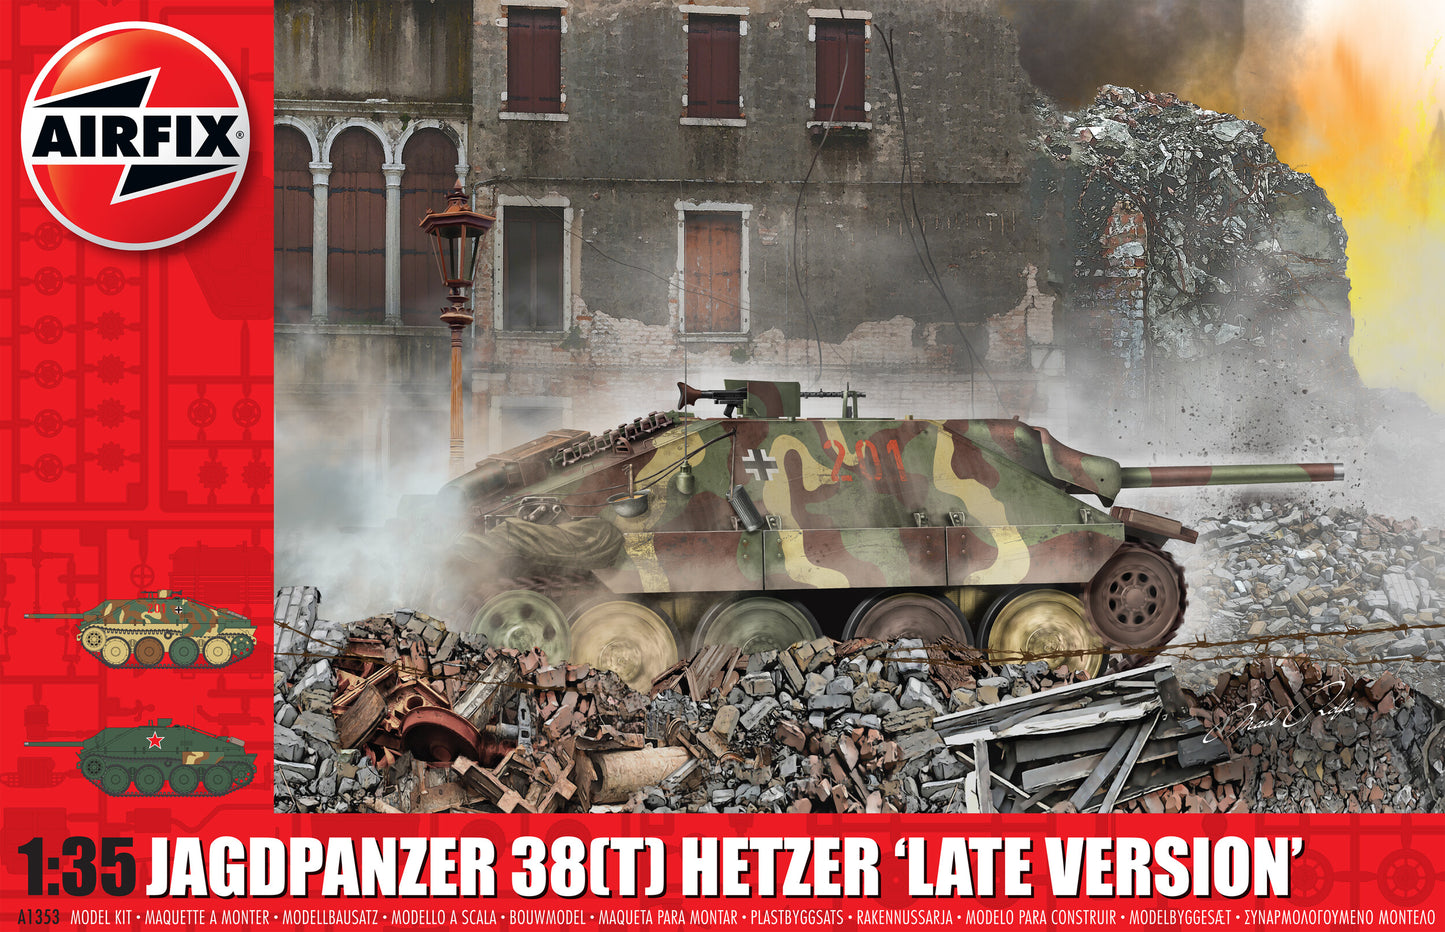 Airfix 1/35th scale Jagdpanzer 38(t) Hetzer "Late Version"